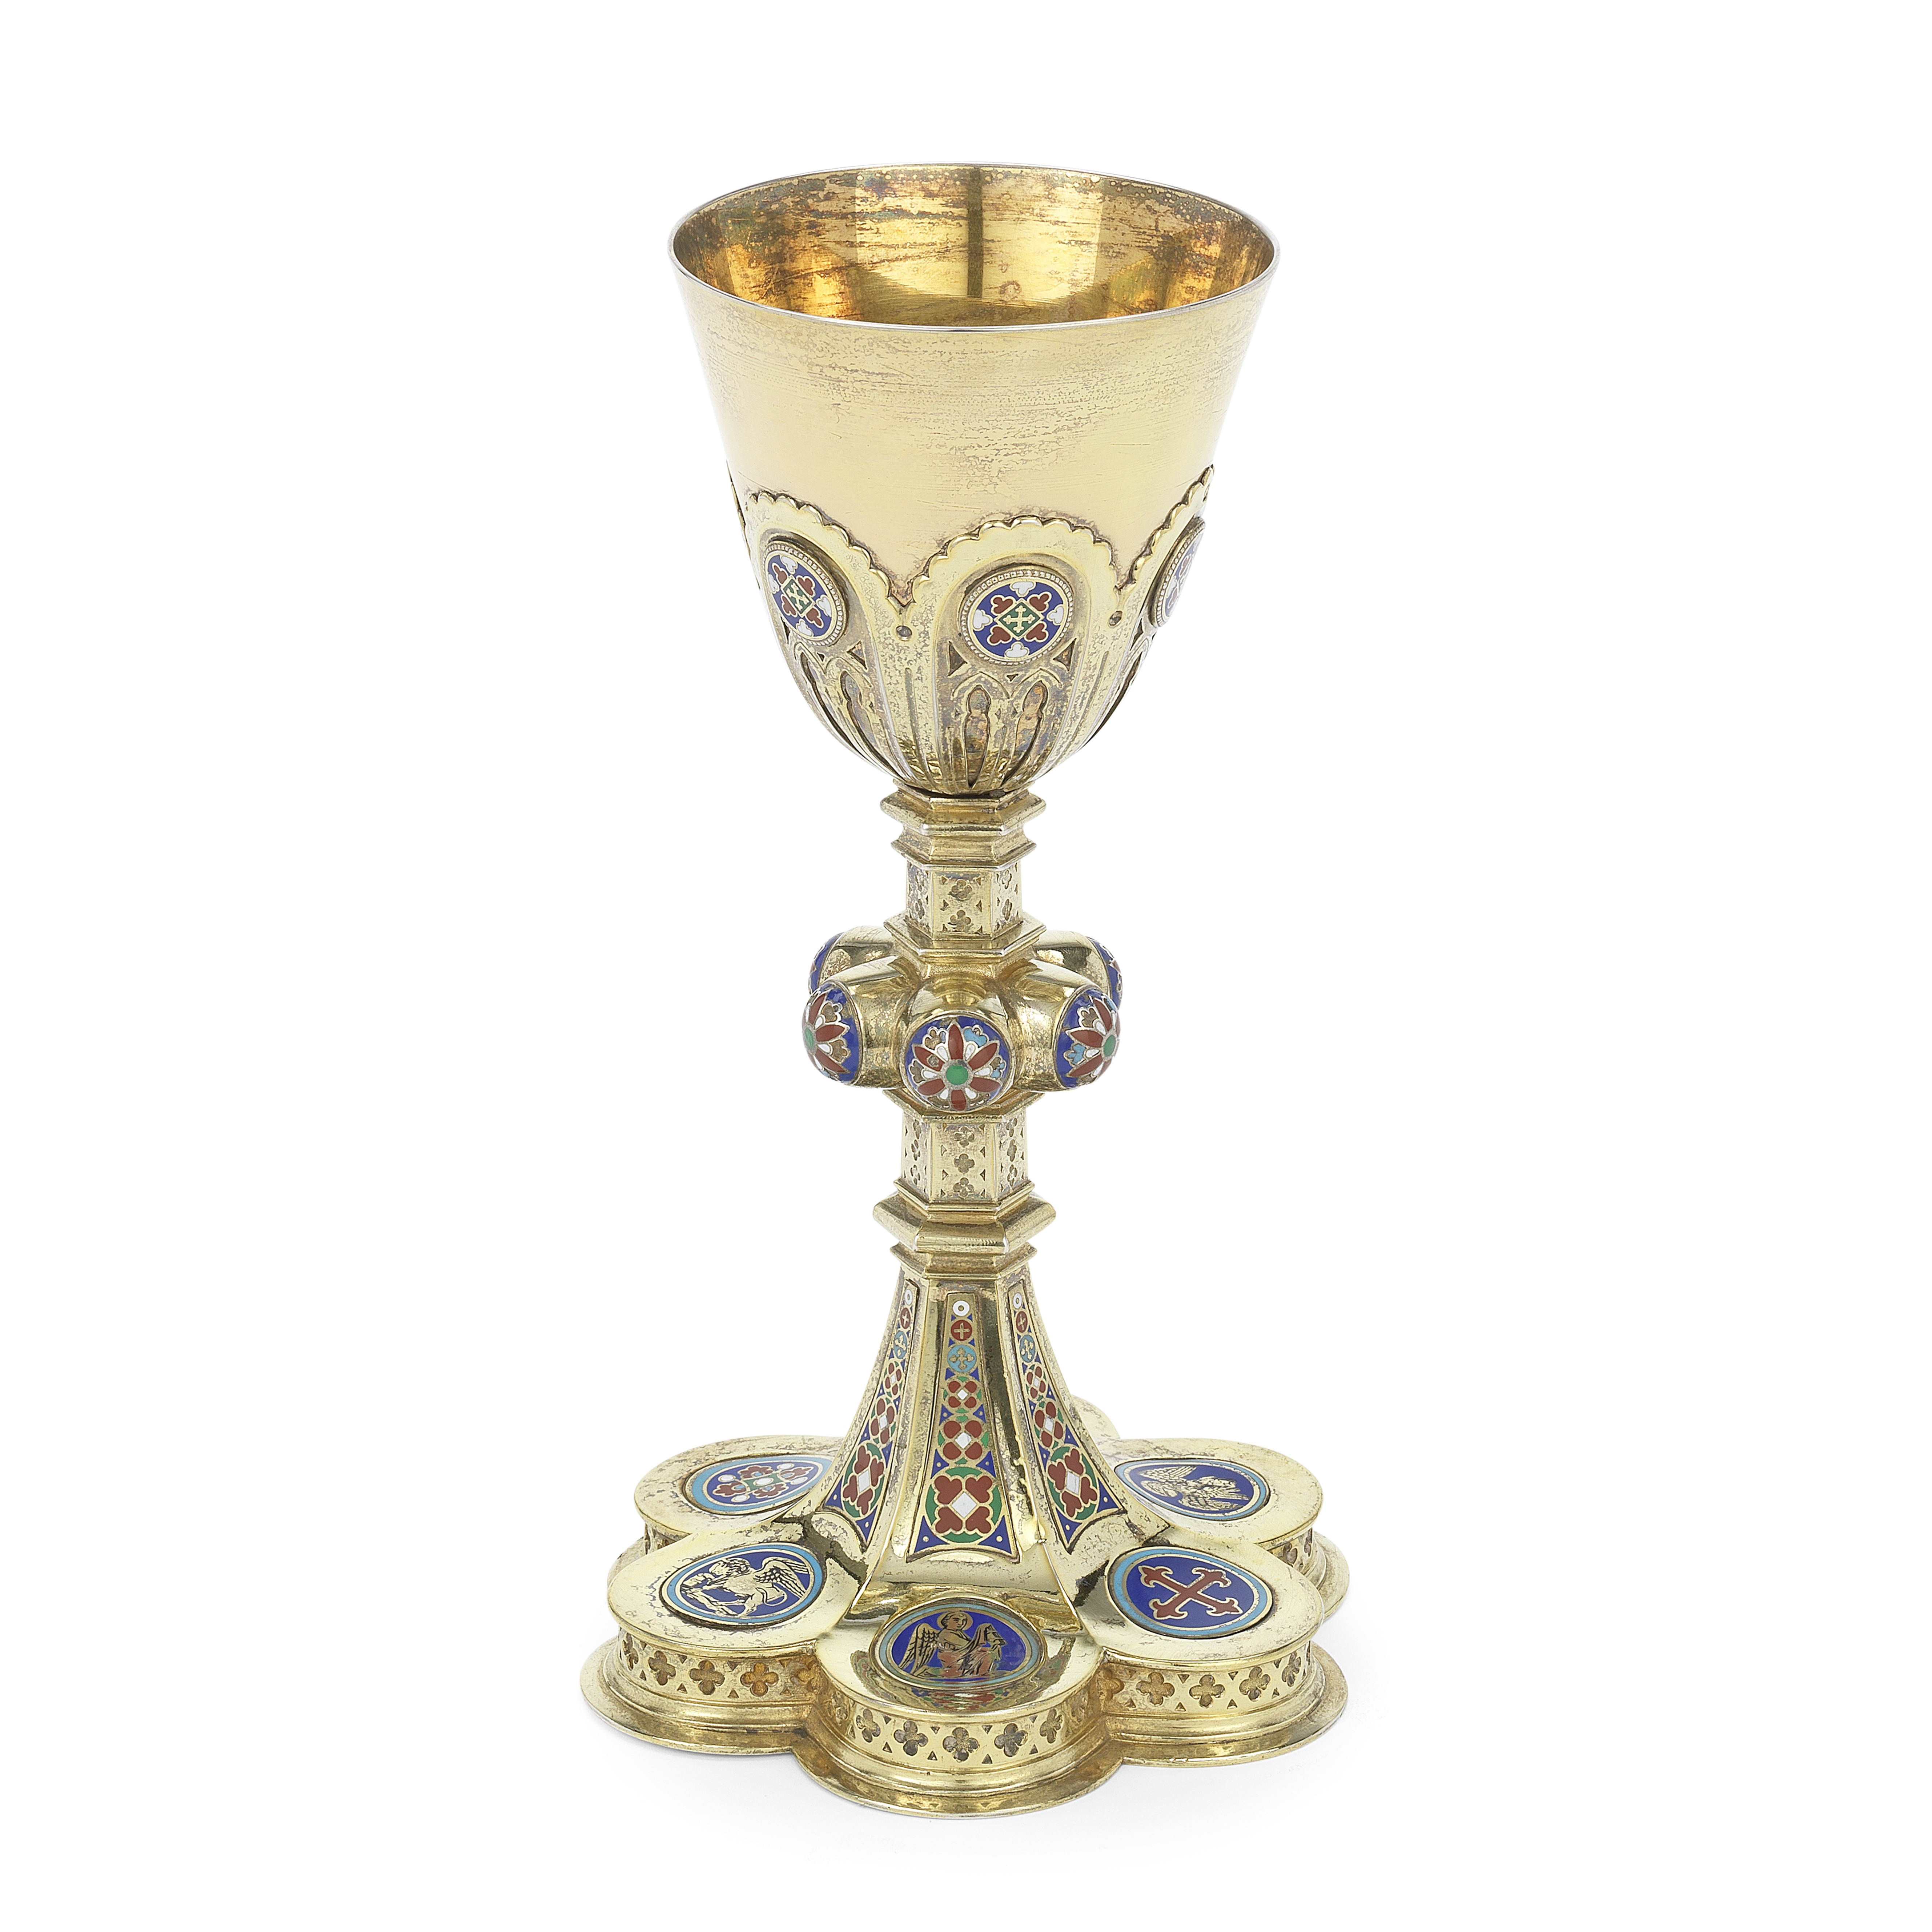 A French silver-gilt and enamel chalice Placide Poussielgue-Rusand, Paris circa 1860